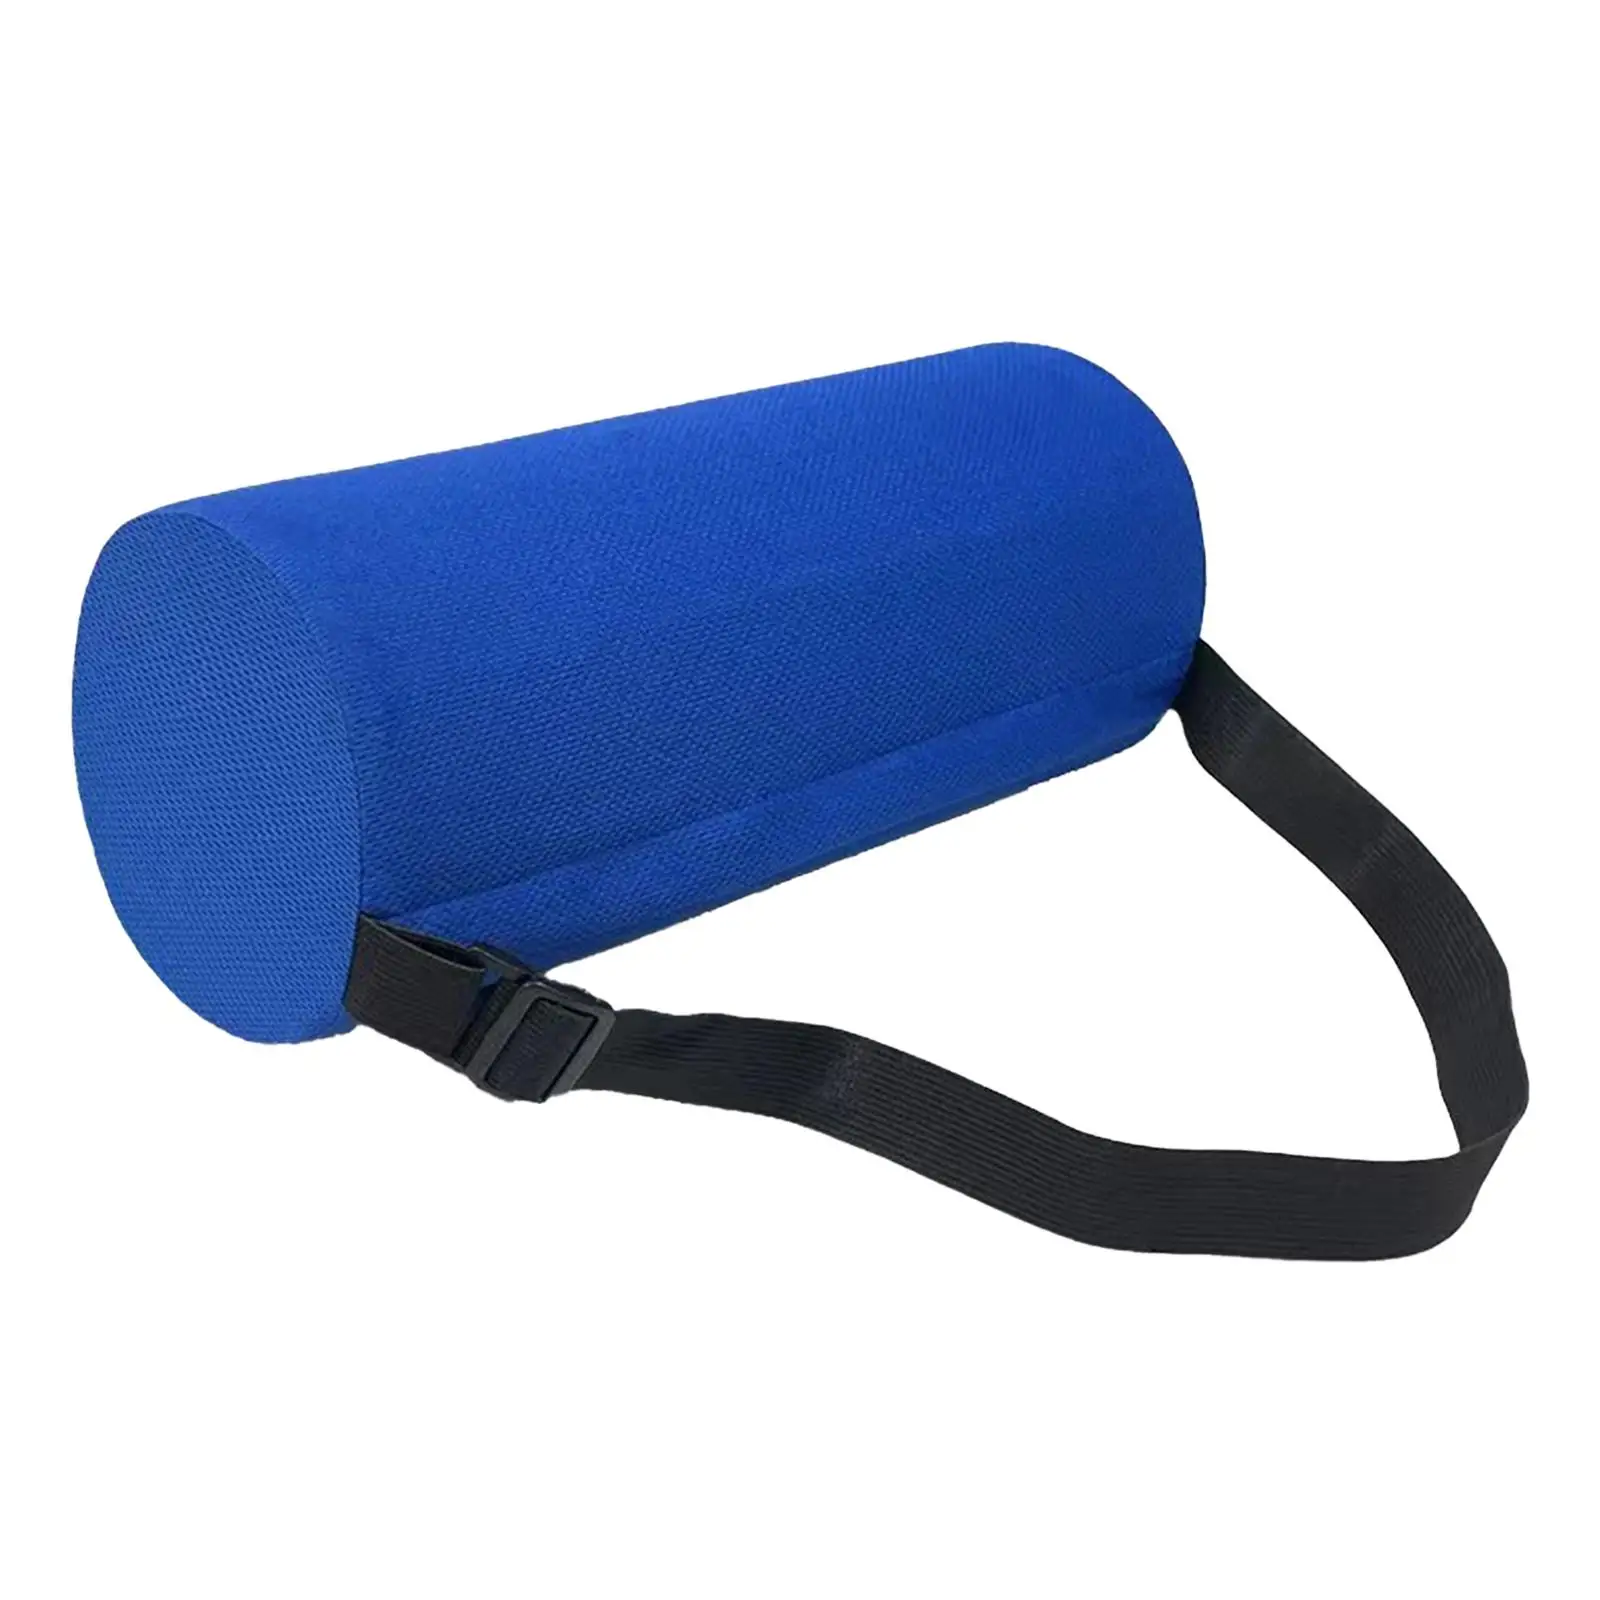 Cylindrical Waist Pillow Memory Foam Chair Pad Nonslip Waist Support Pillow Comfortable for Office Dorm Car Watching TV